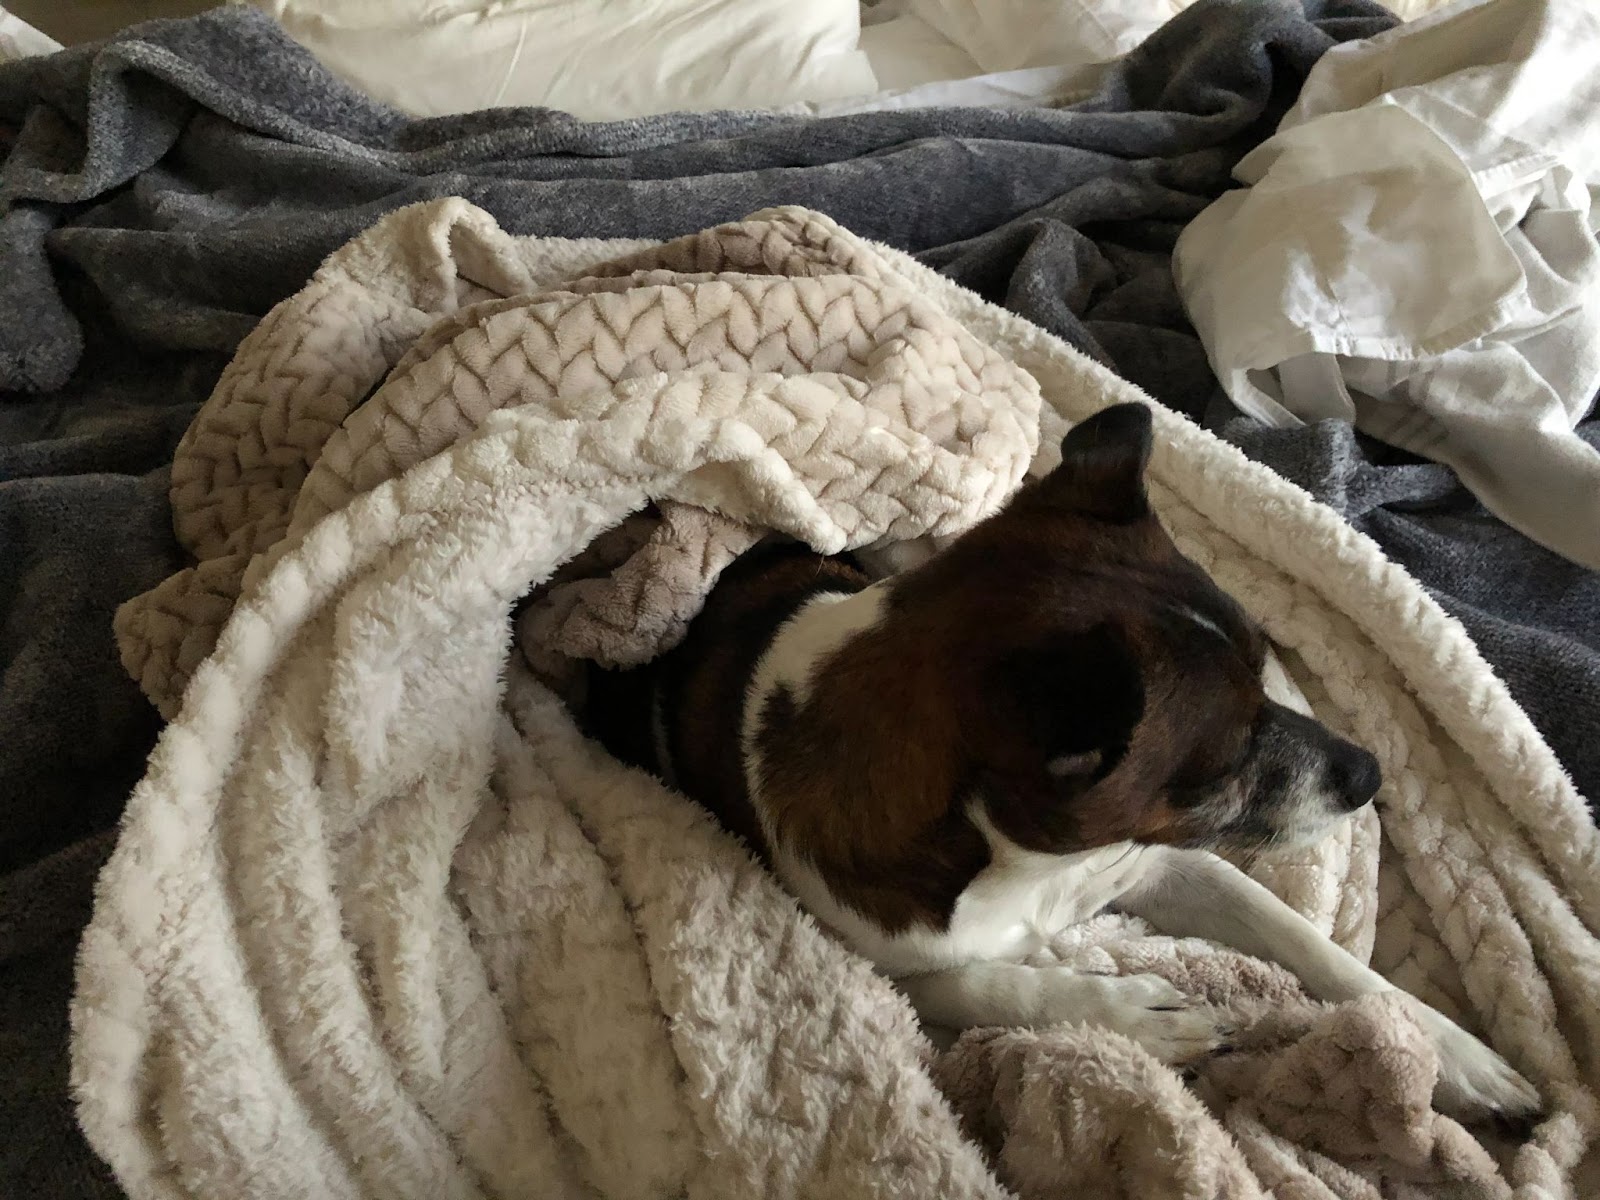 Little Crumpet snuggled under a blanket